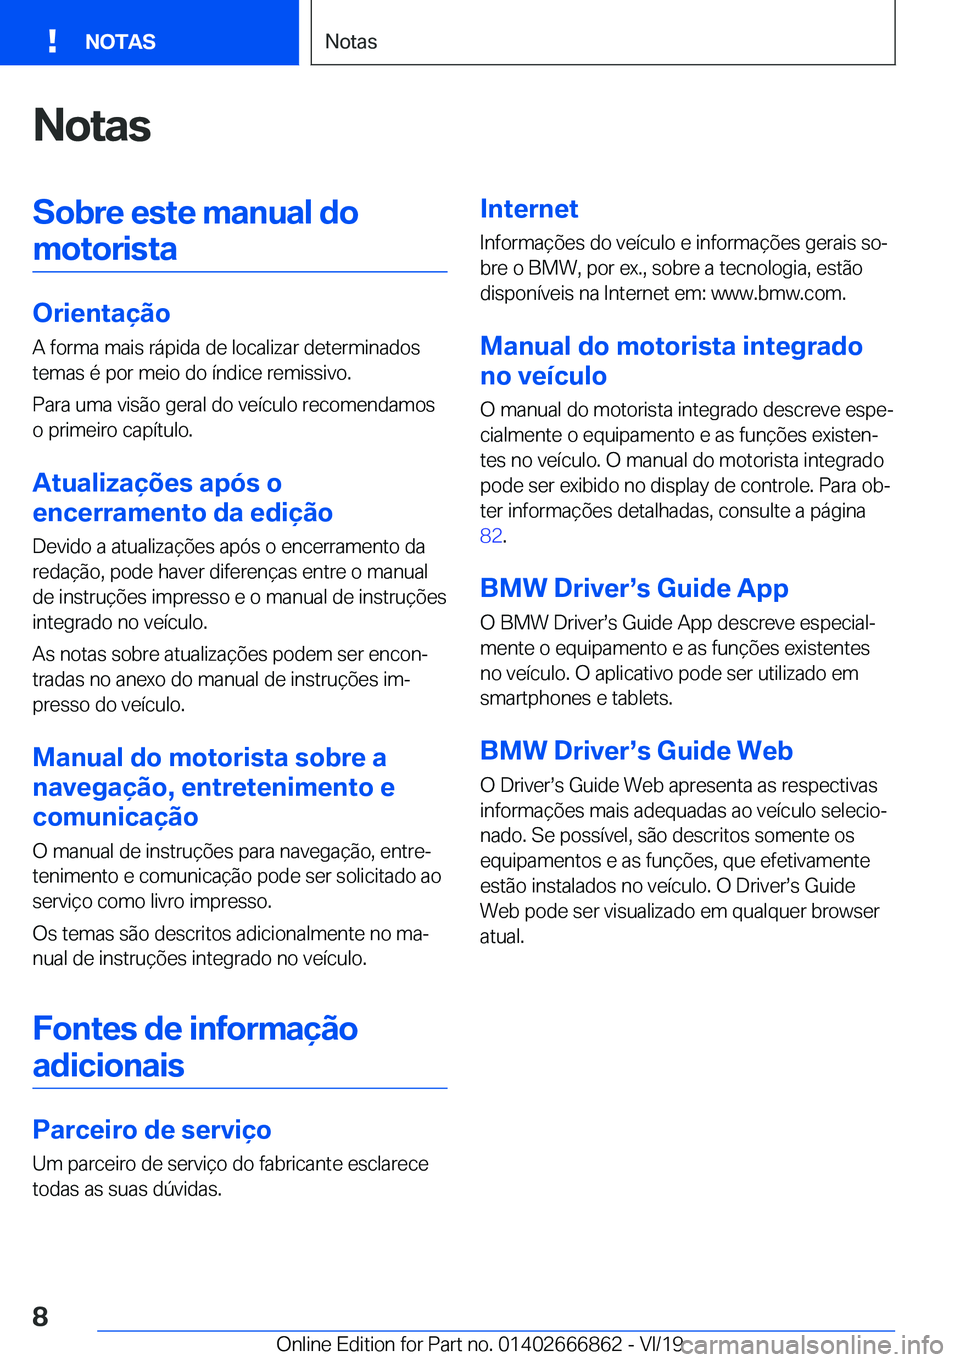 BMW X3 M 2020  Manual do condutor (in Portuguese) �N�o�t�a�s�S�o�b�r�e��e�s�t�e��m�a�n�u�a�l��d�o�m�o�t�o�r�i�s�t�a
�O�r�i�e�n�t�a�